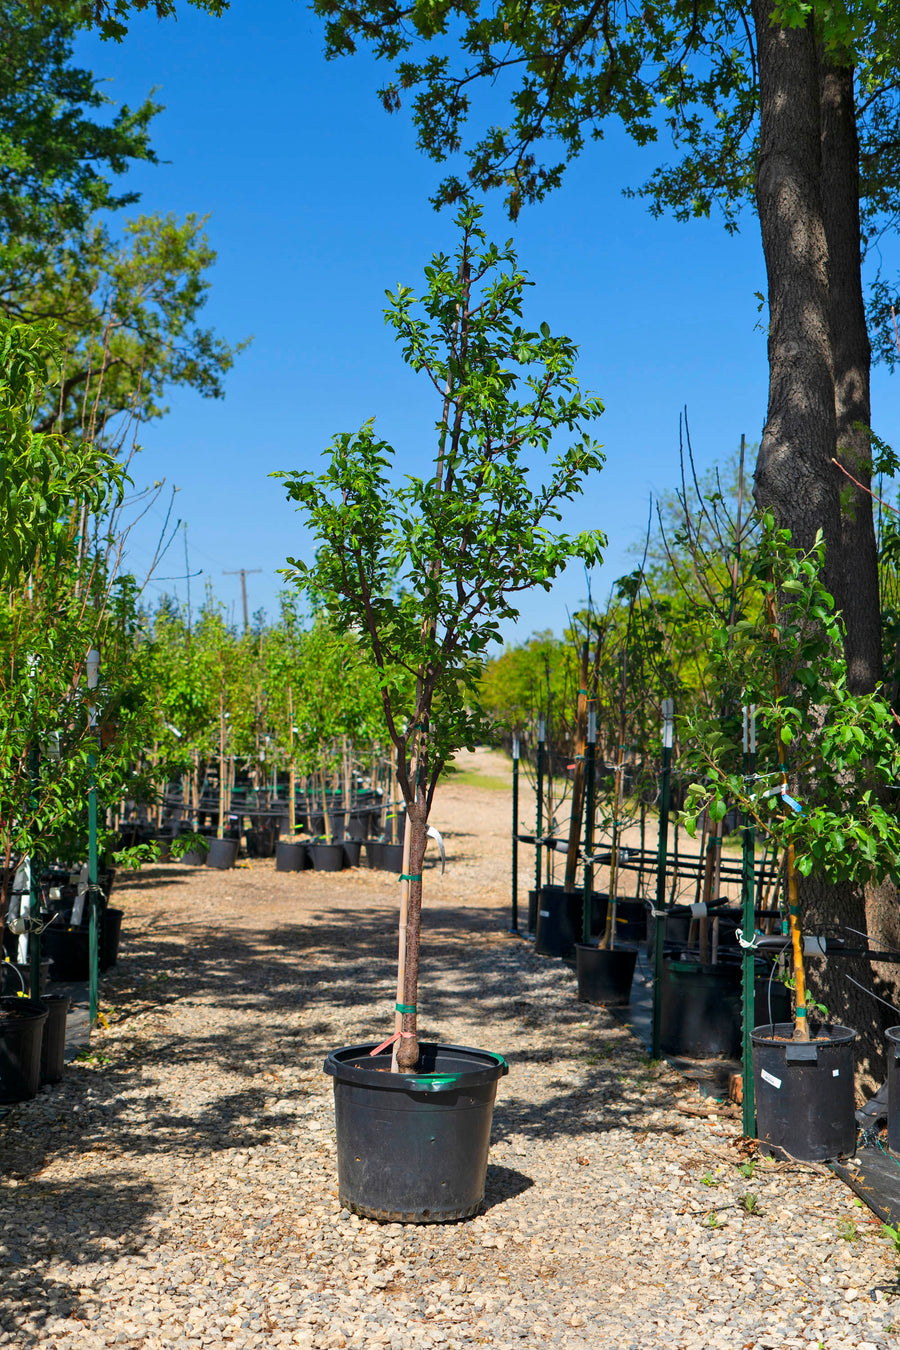 Plumcot Tree - Apricot/Plum Hybrid